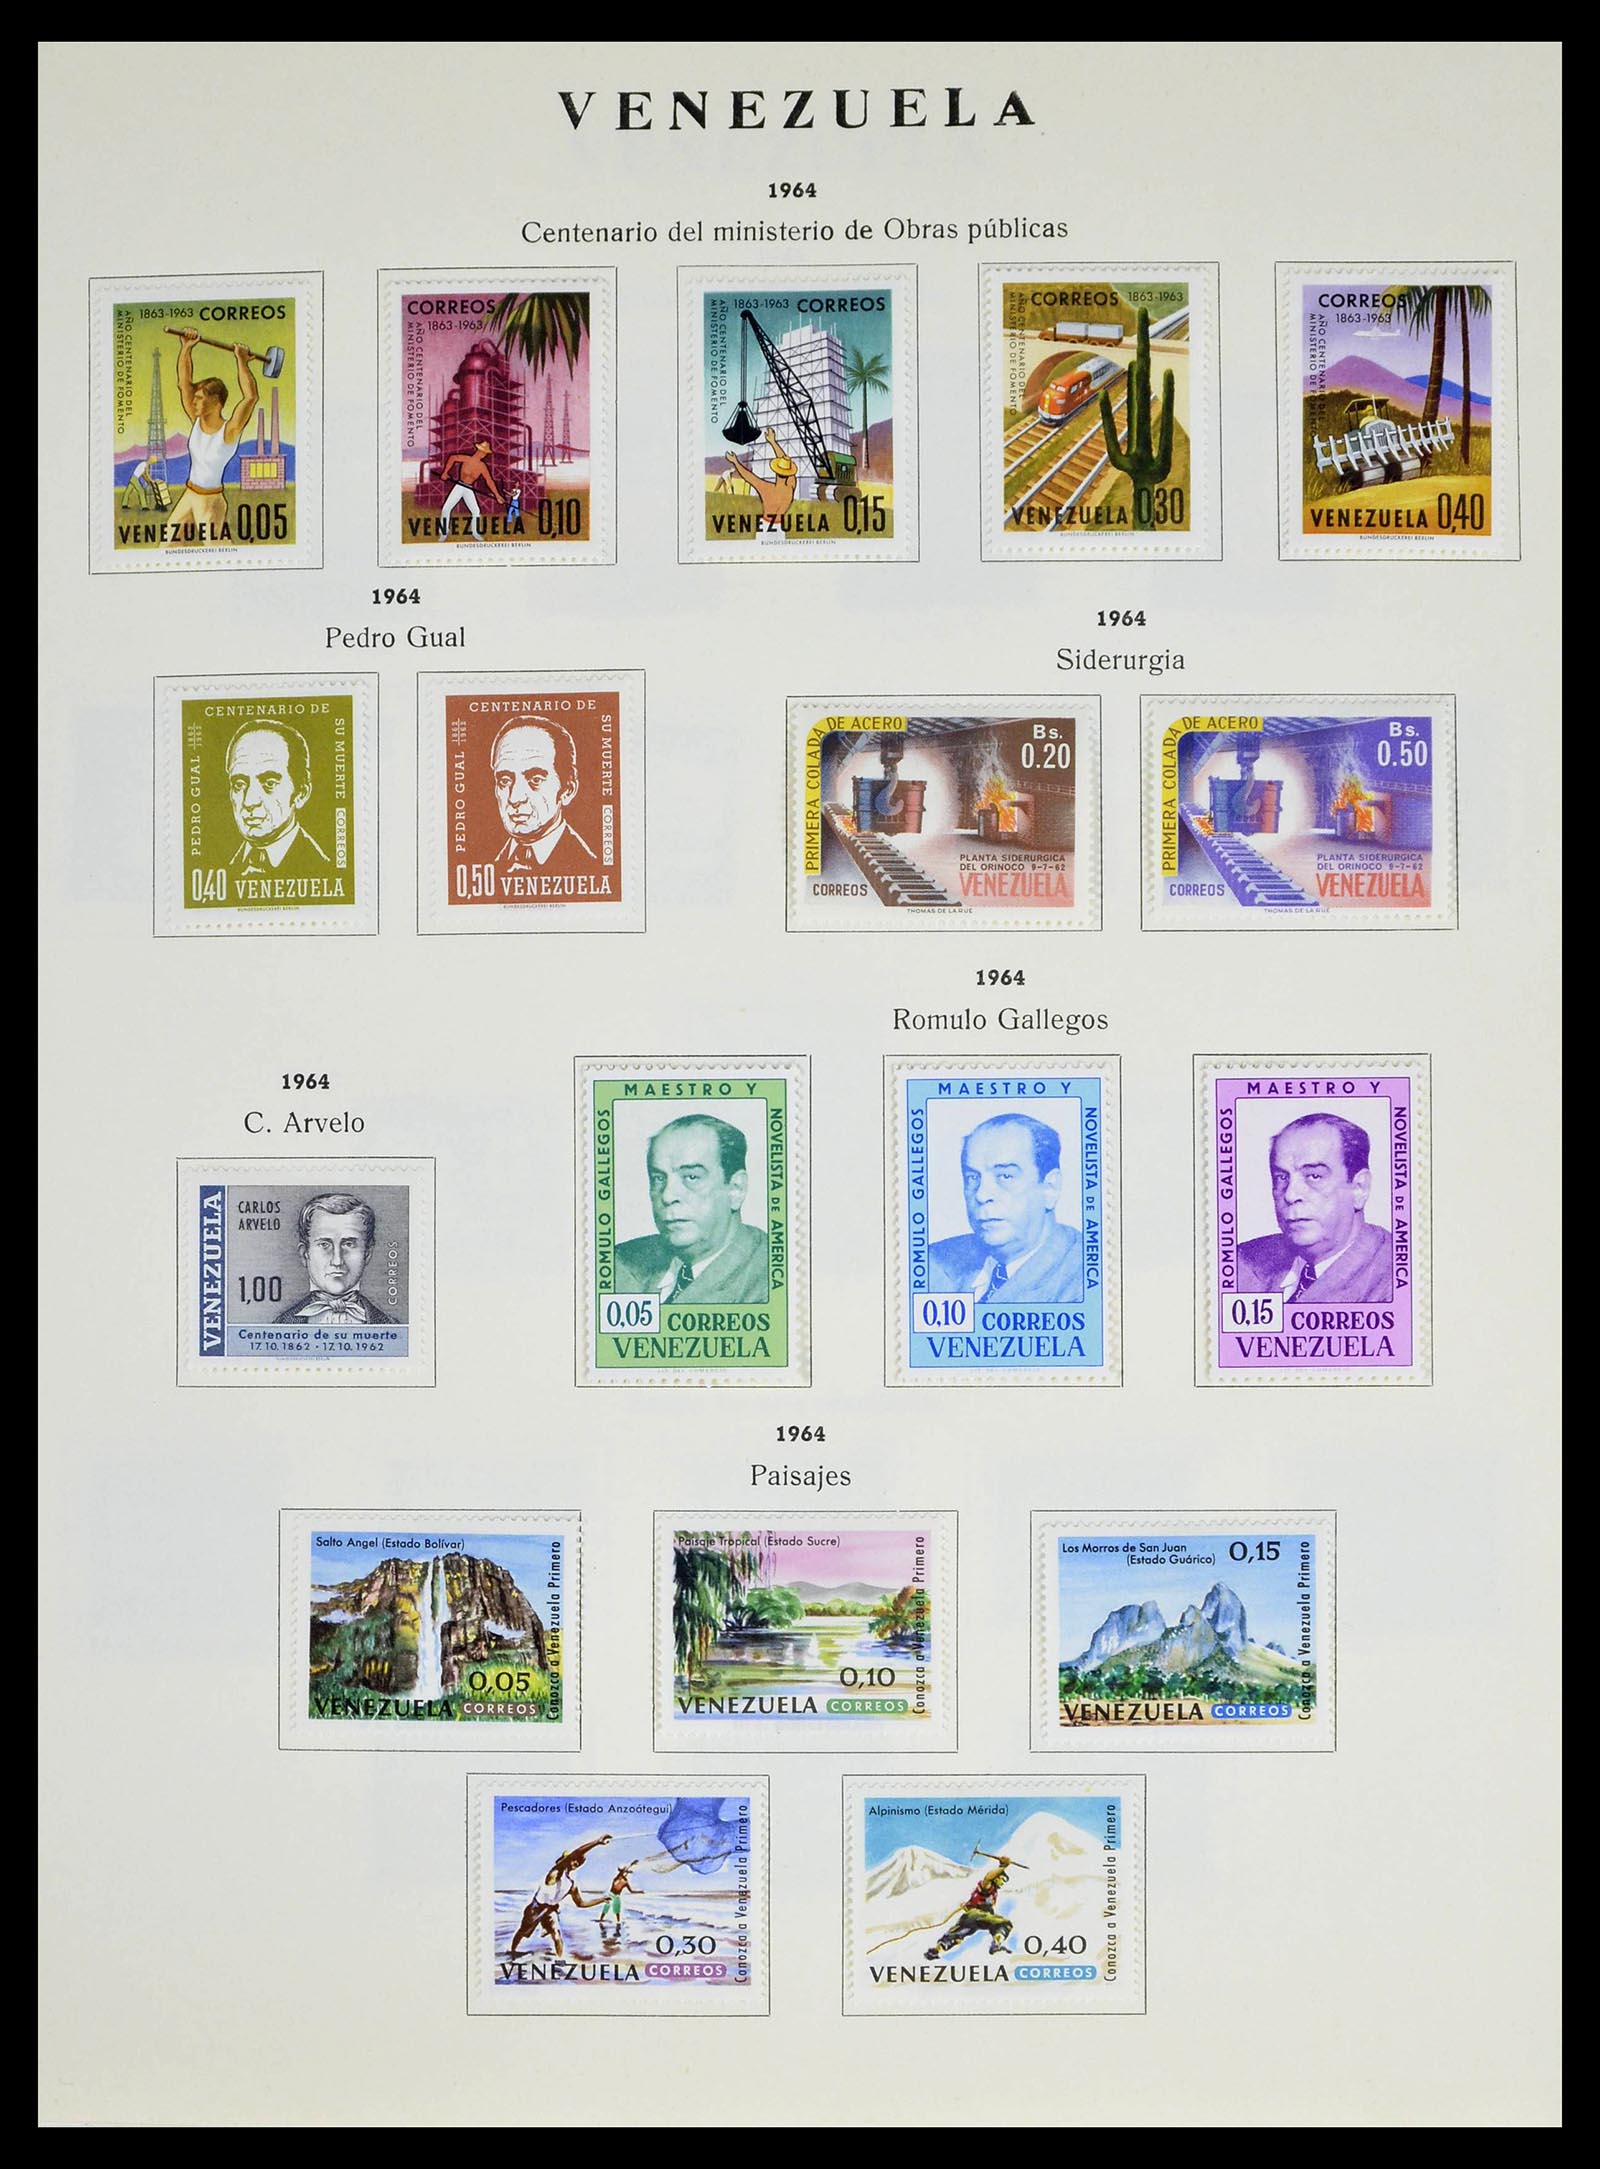 39223 0049 - Stamp collection 39223 Venezuela 1859-1984.